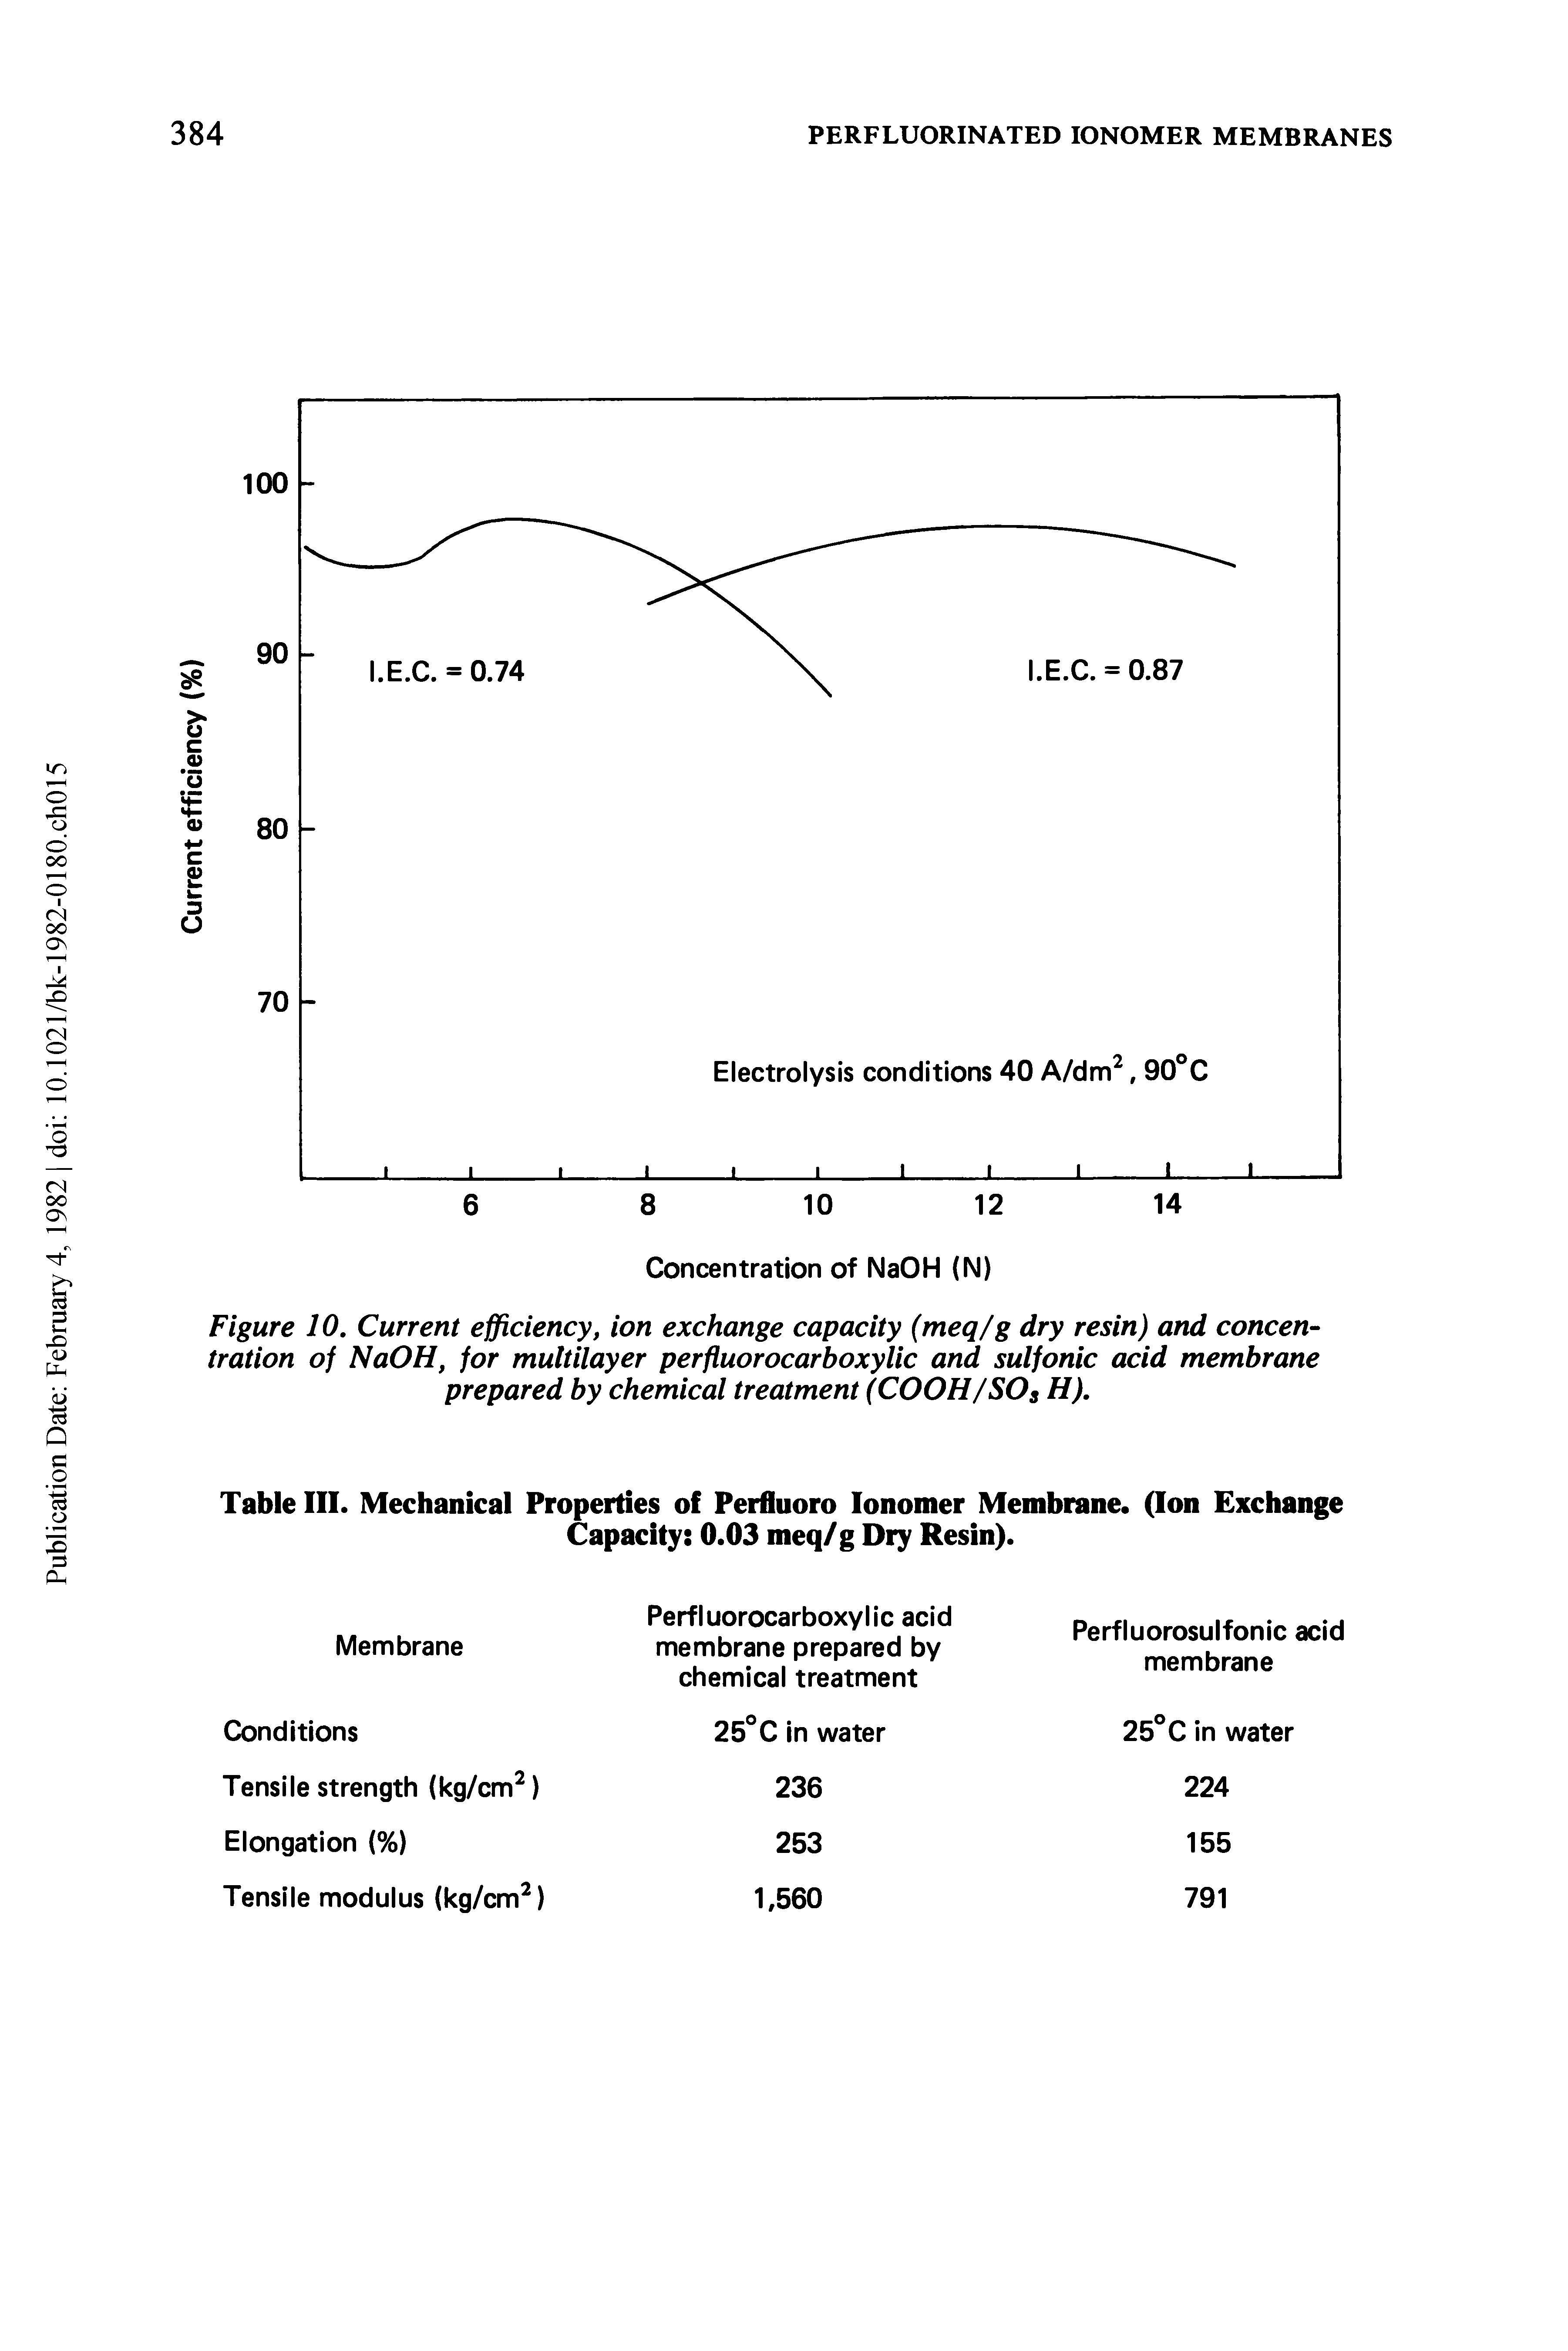 Table III. Mechanical Properties of Perfluoro Ionomer Membrane. (Ion Exchange Capacity 0.03 meq/g Dry Resin).